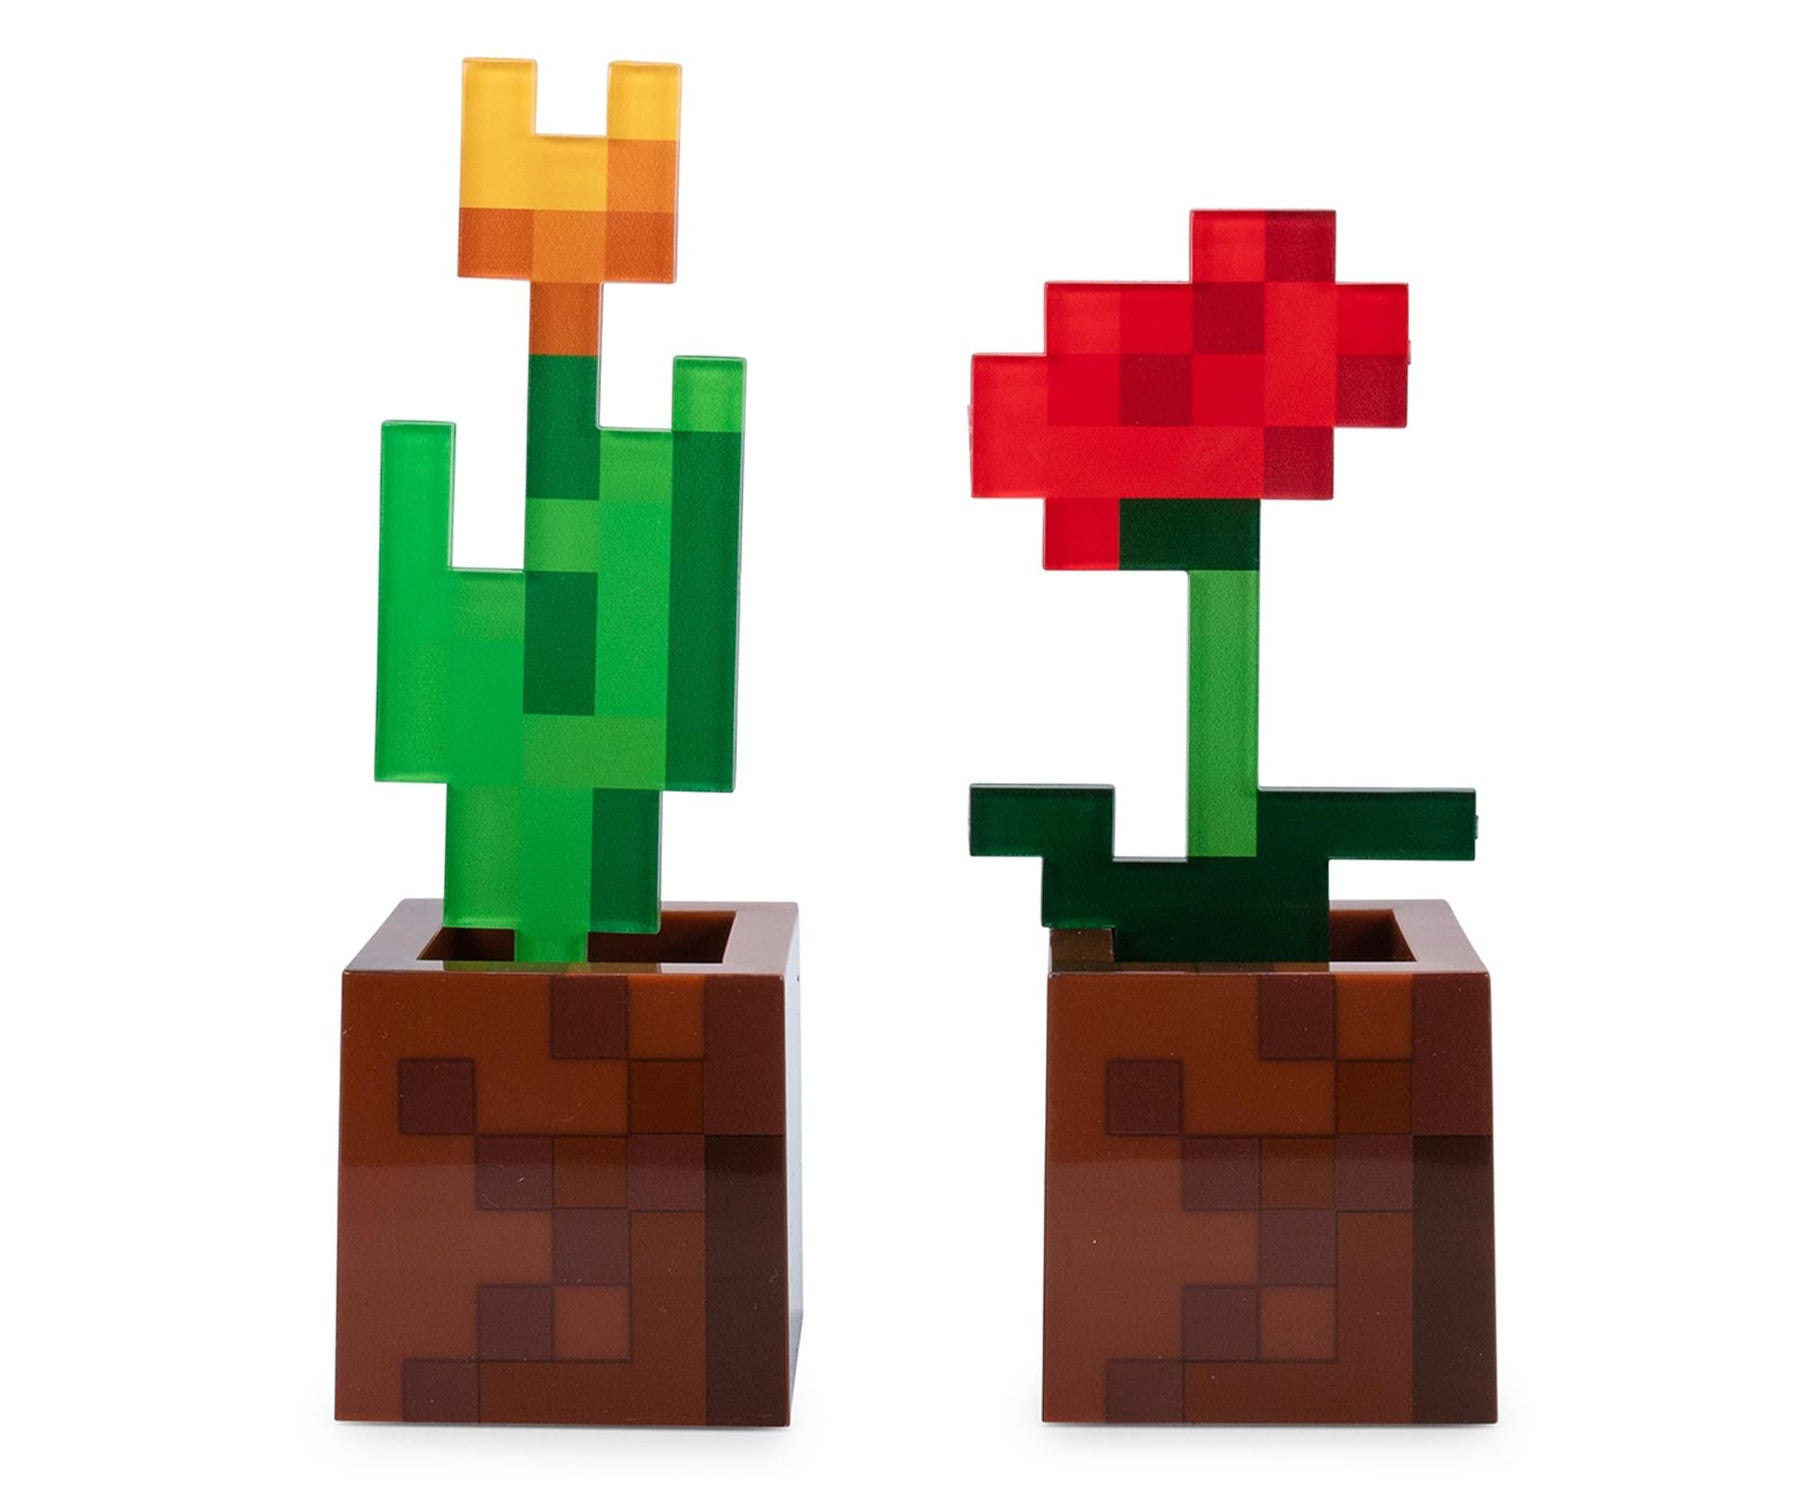 Minecraft Orange Tulip and Poppy Flower Pot Mood Lights | Set of 2